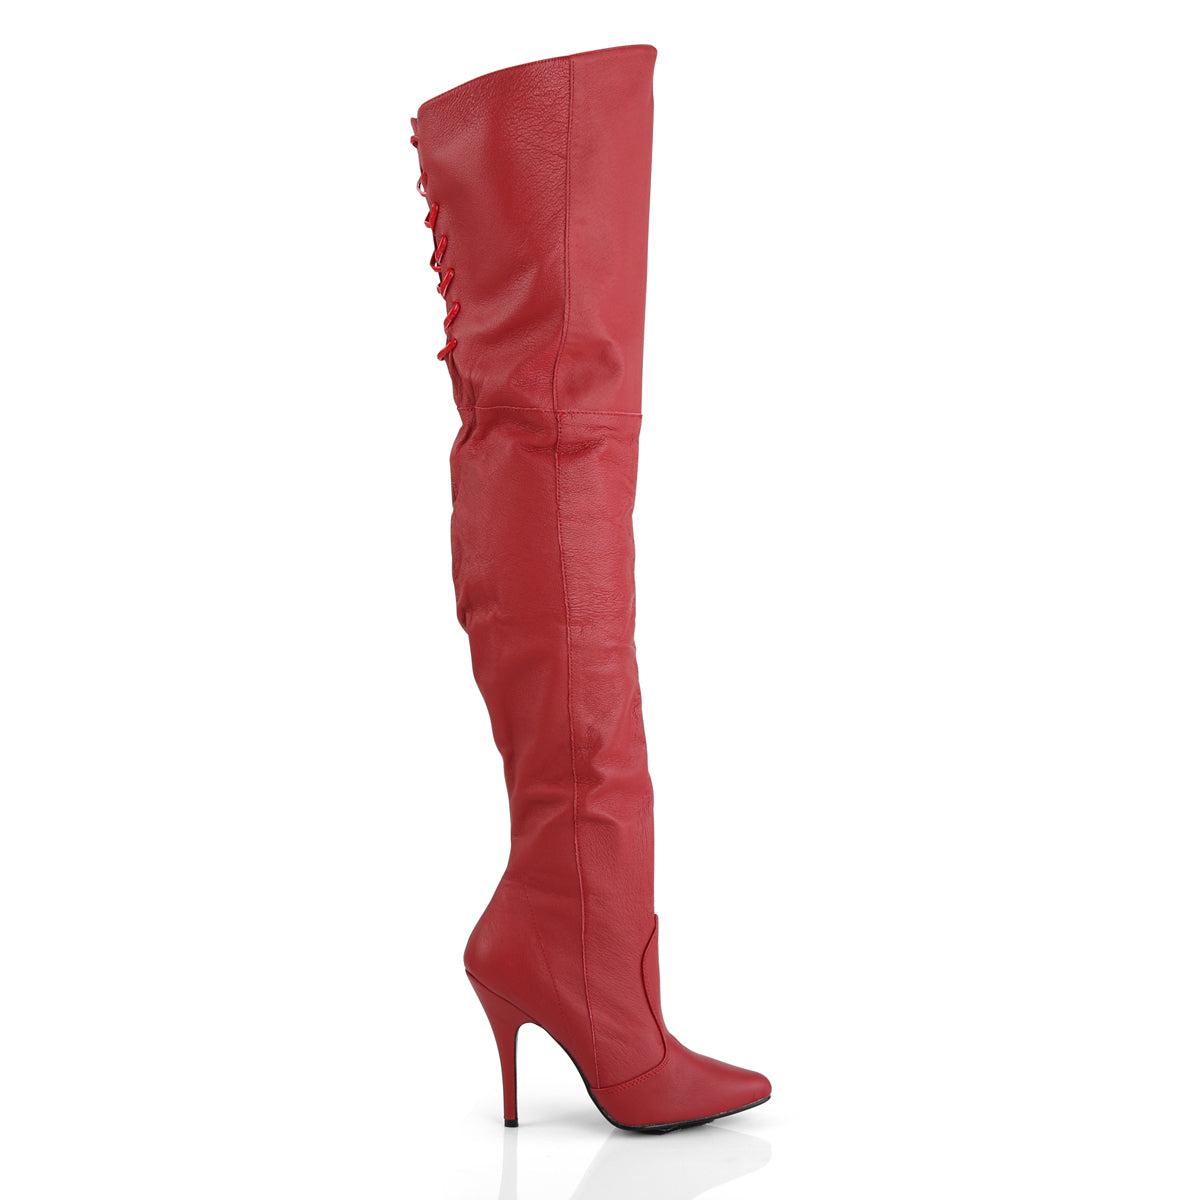 LEGEND-8899 Pleaser 5 Inch Heel Red Leather Fetish Footwear-Pleaser- Sexy Shoes Fetish Heels